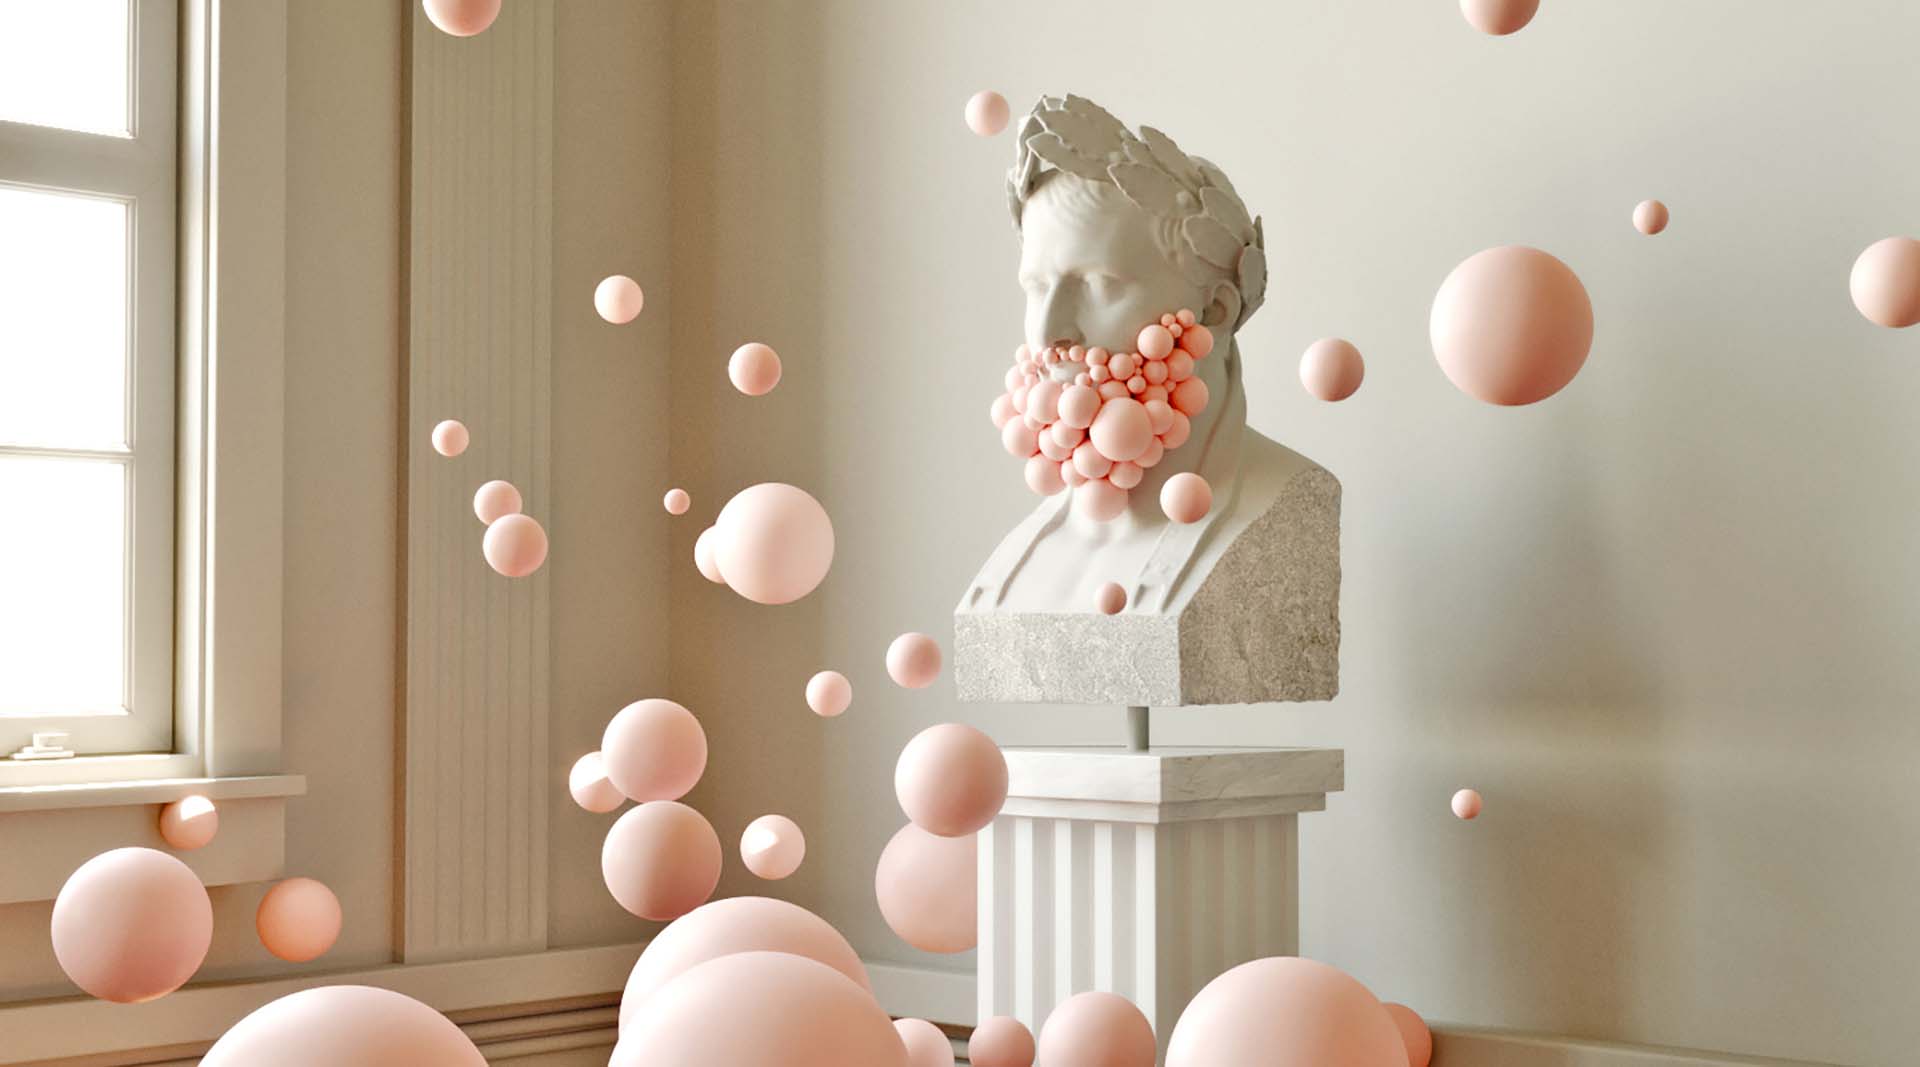 design-motion-3d-photography-octane-redshift-corona-art-visual-animation-render-style-graphic-piano-music-beauty-digital-balloon-art-pink-interiordesign-sculpture-beard